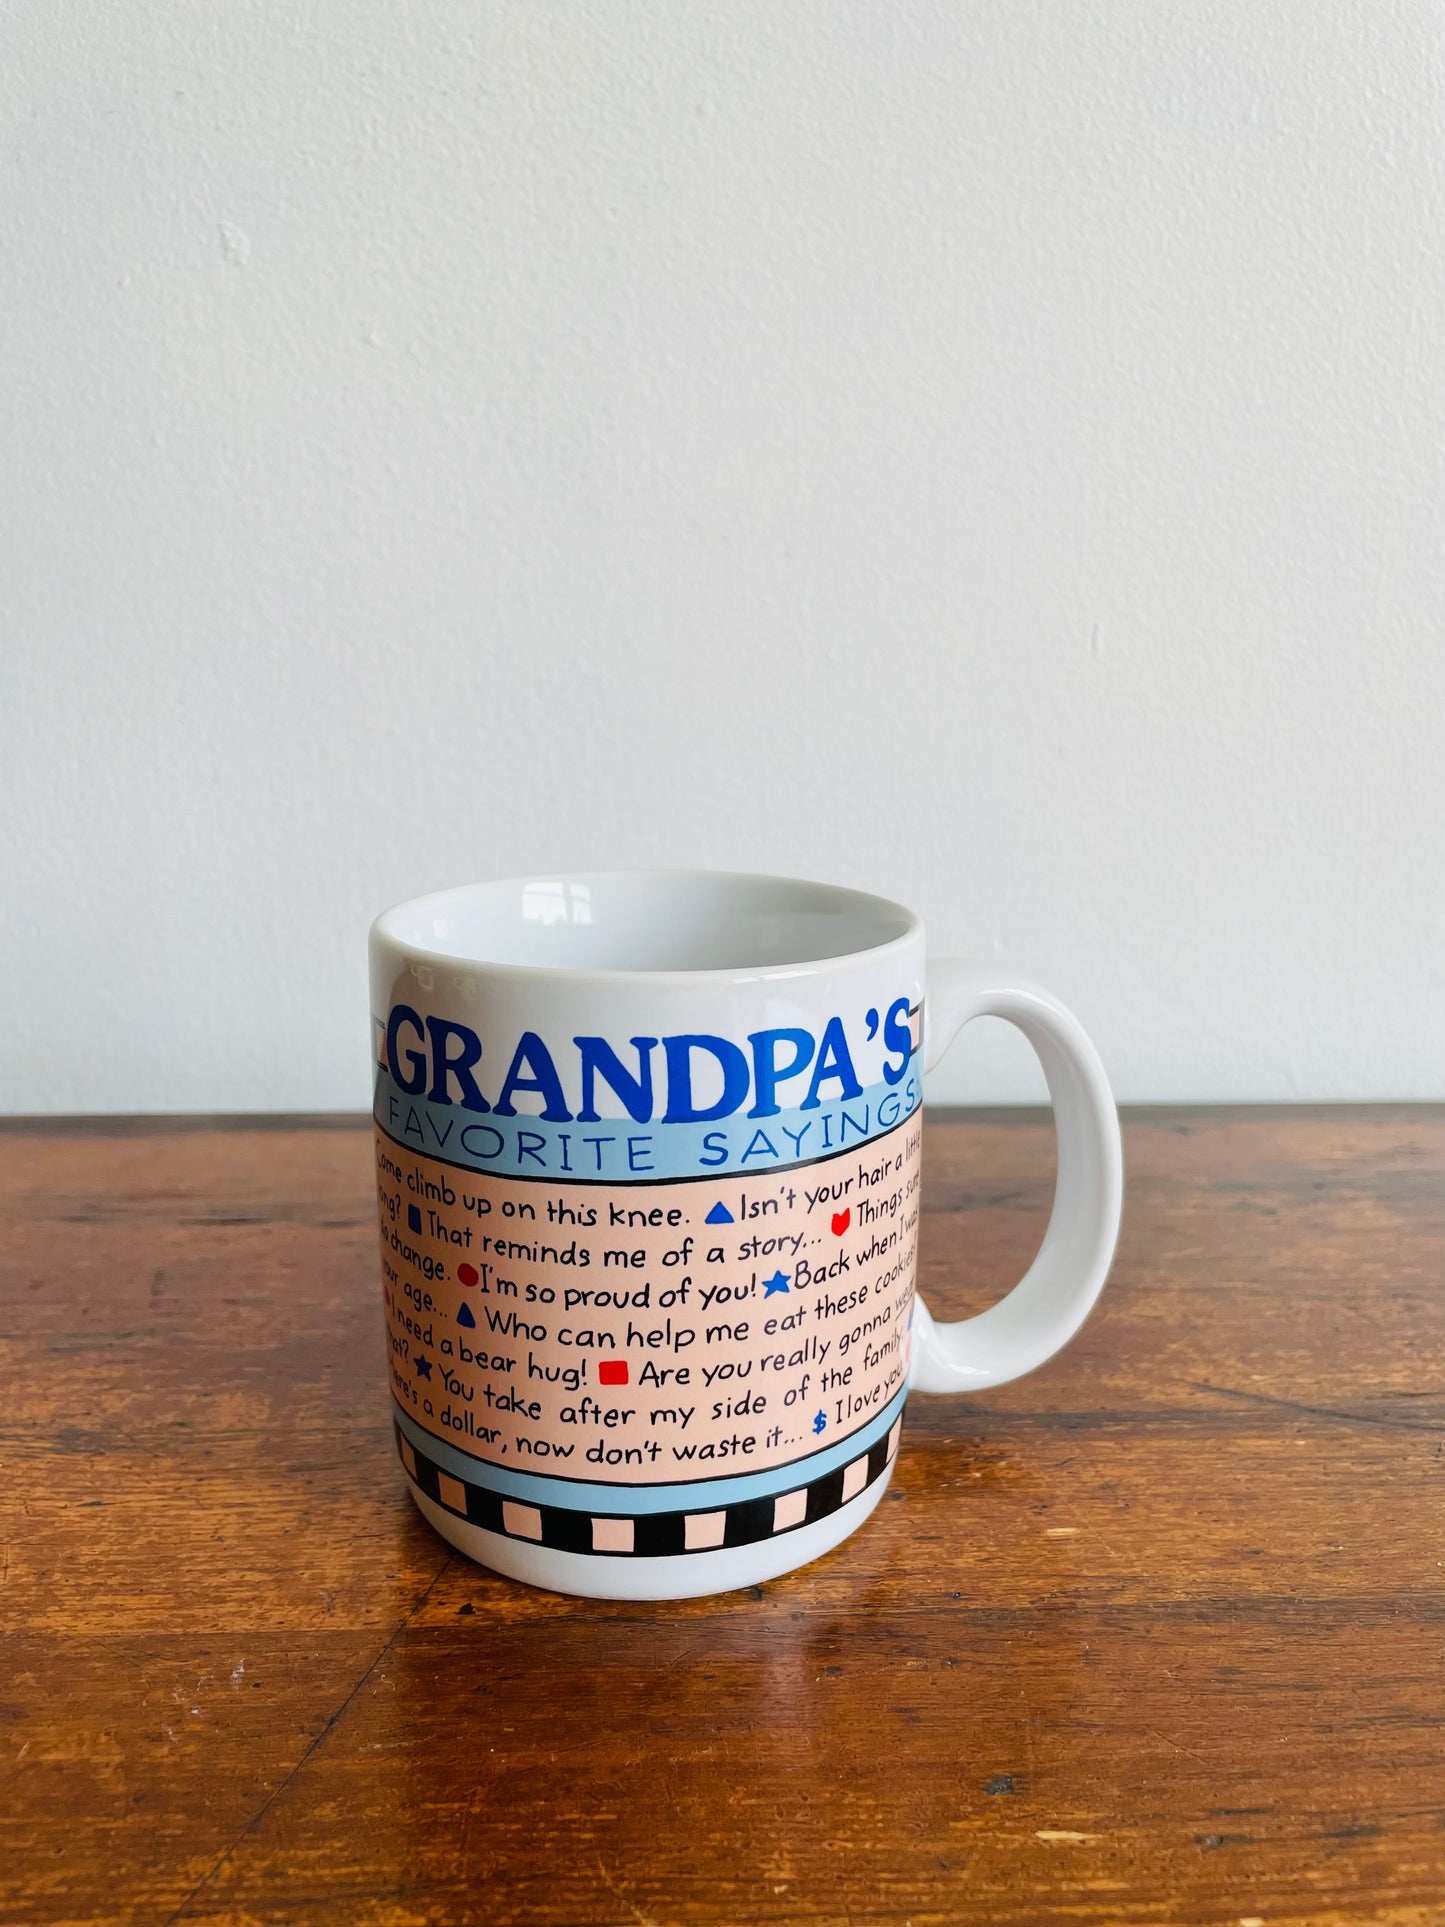 Grandpa's Favourite Sayings - Carlton Cards Stoneware Mug